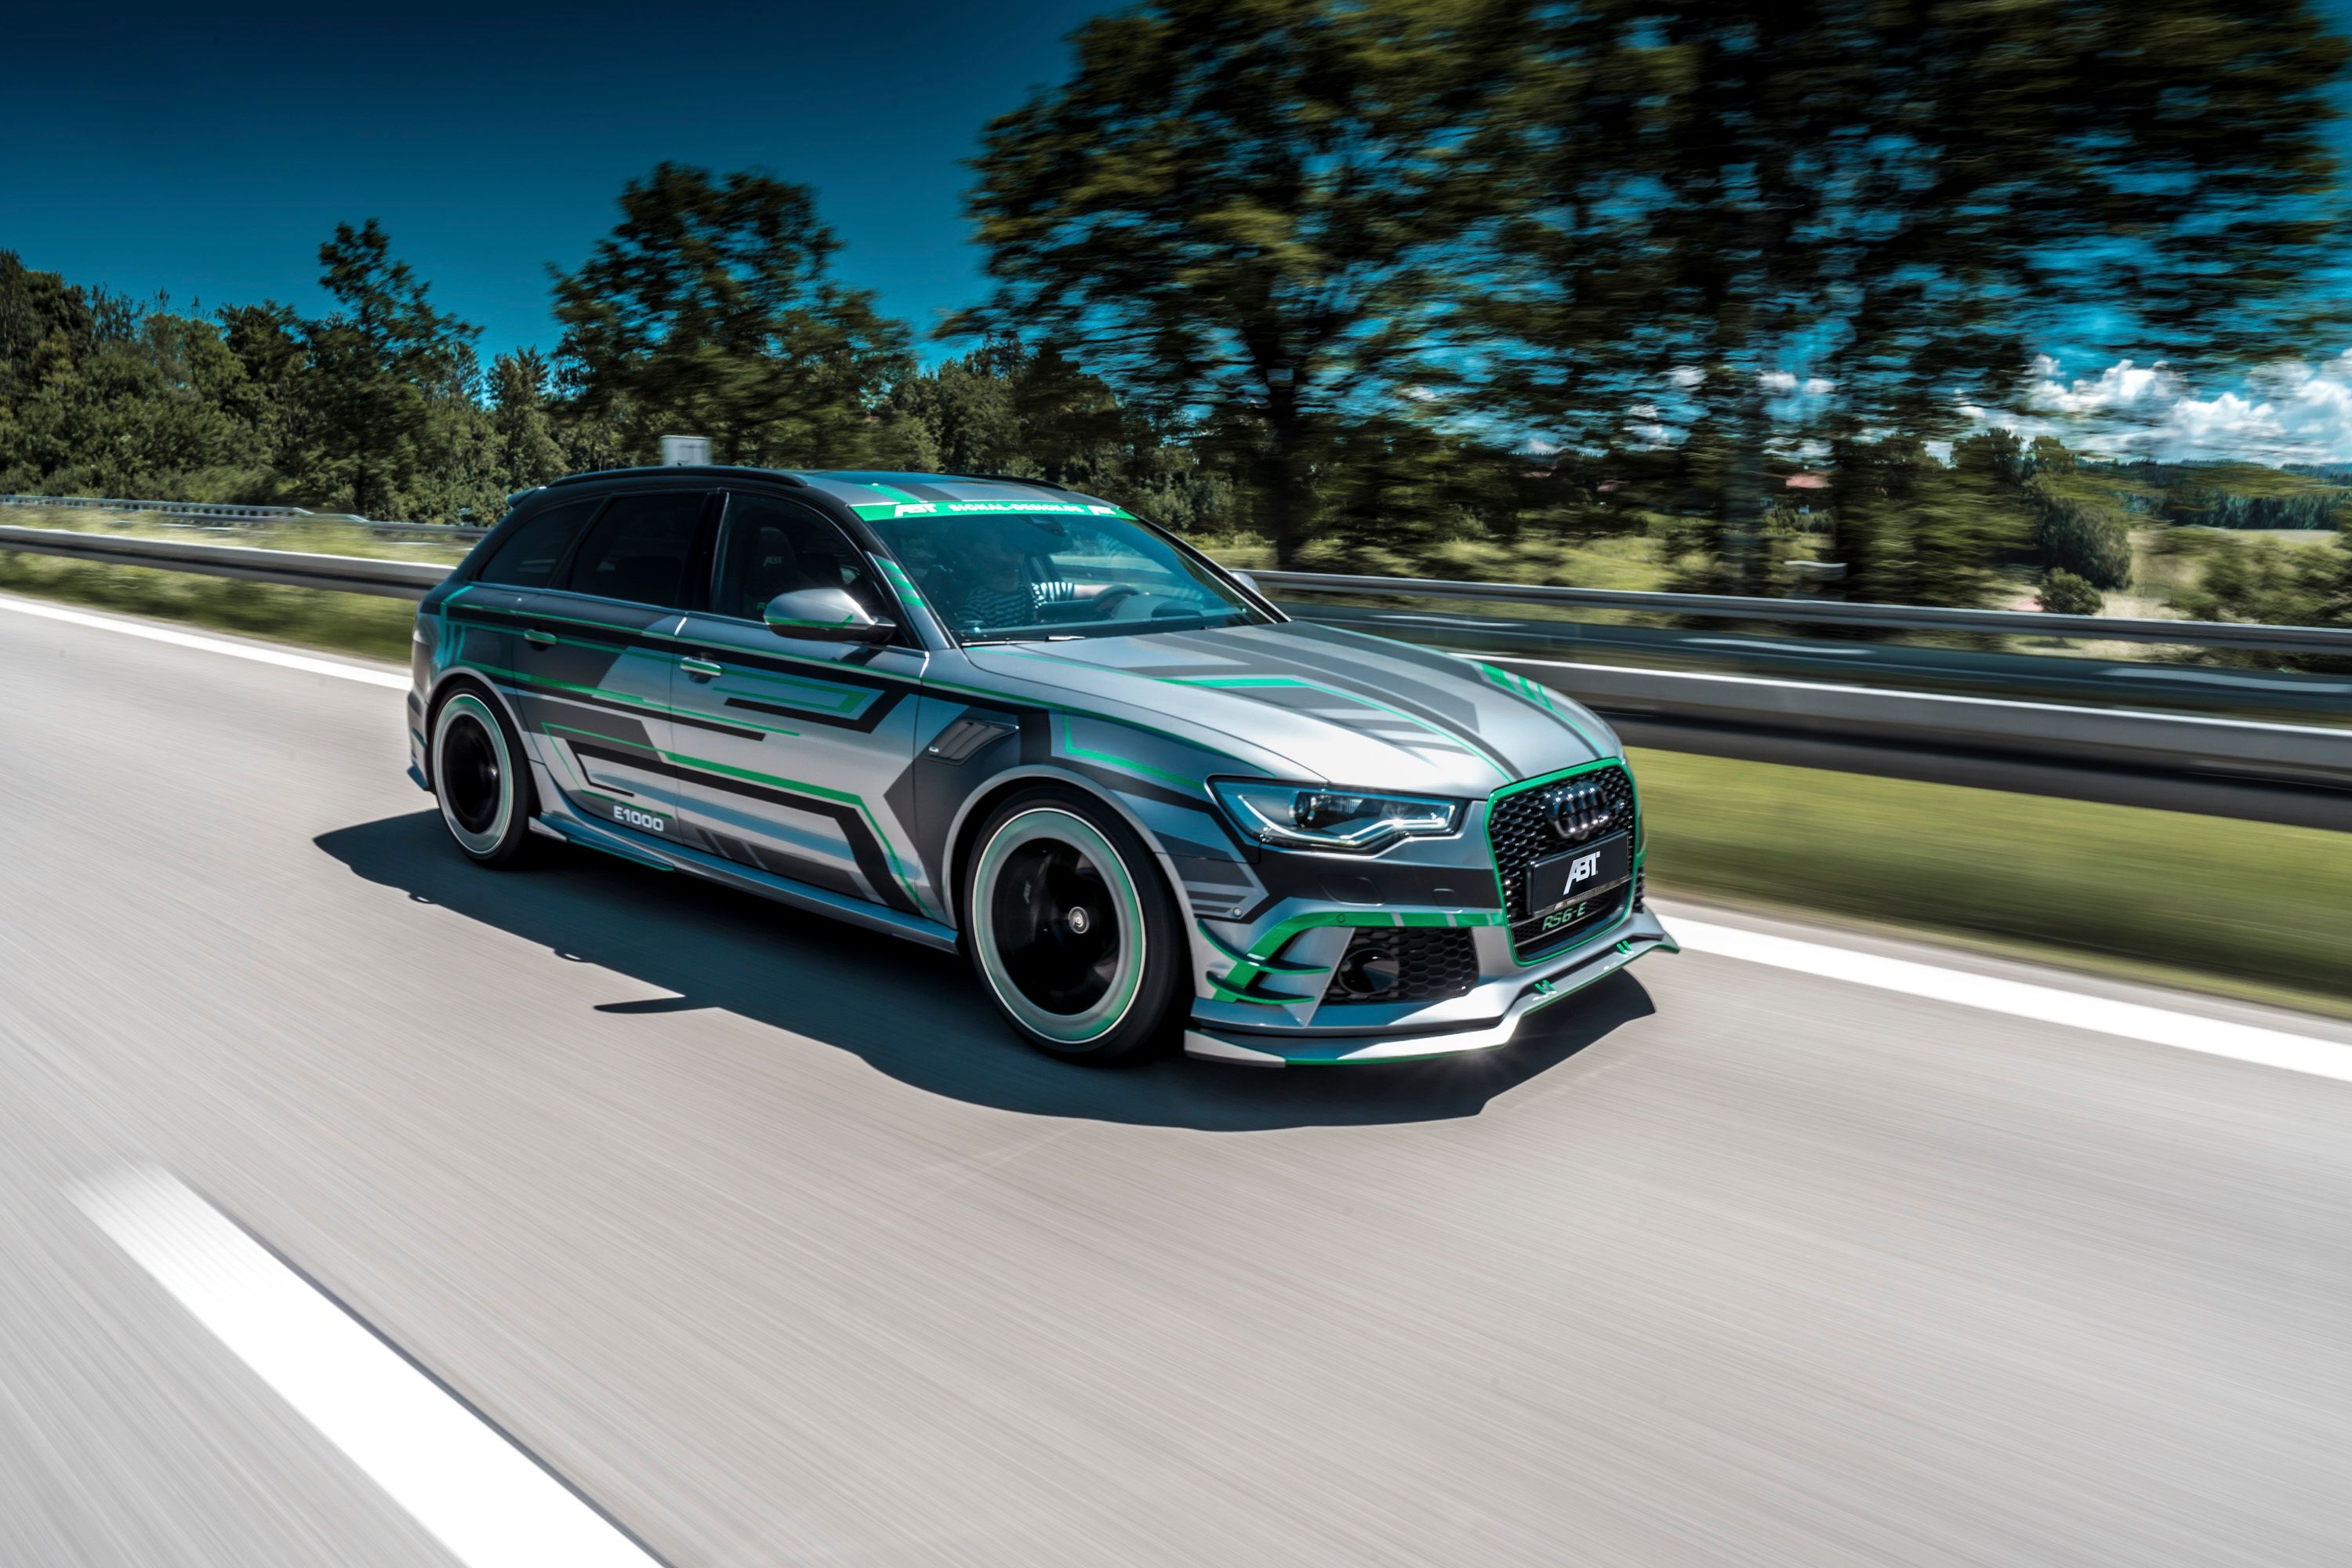 2018 Audi RS6-E Hybrid Concept by ABT